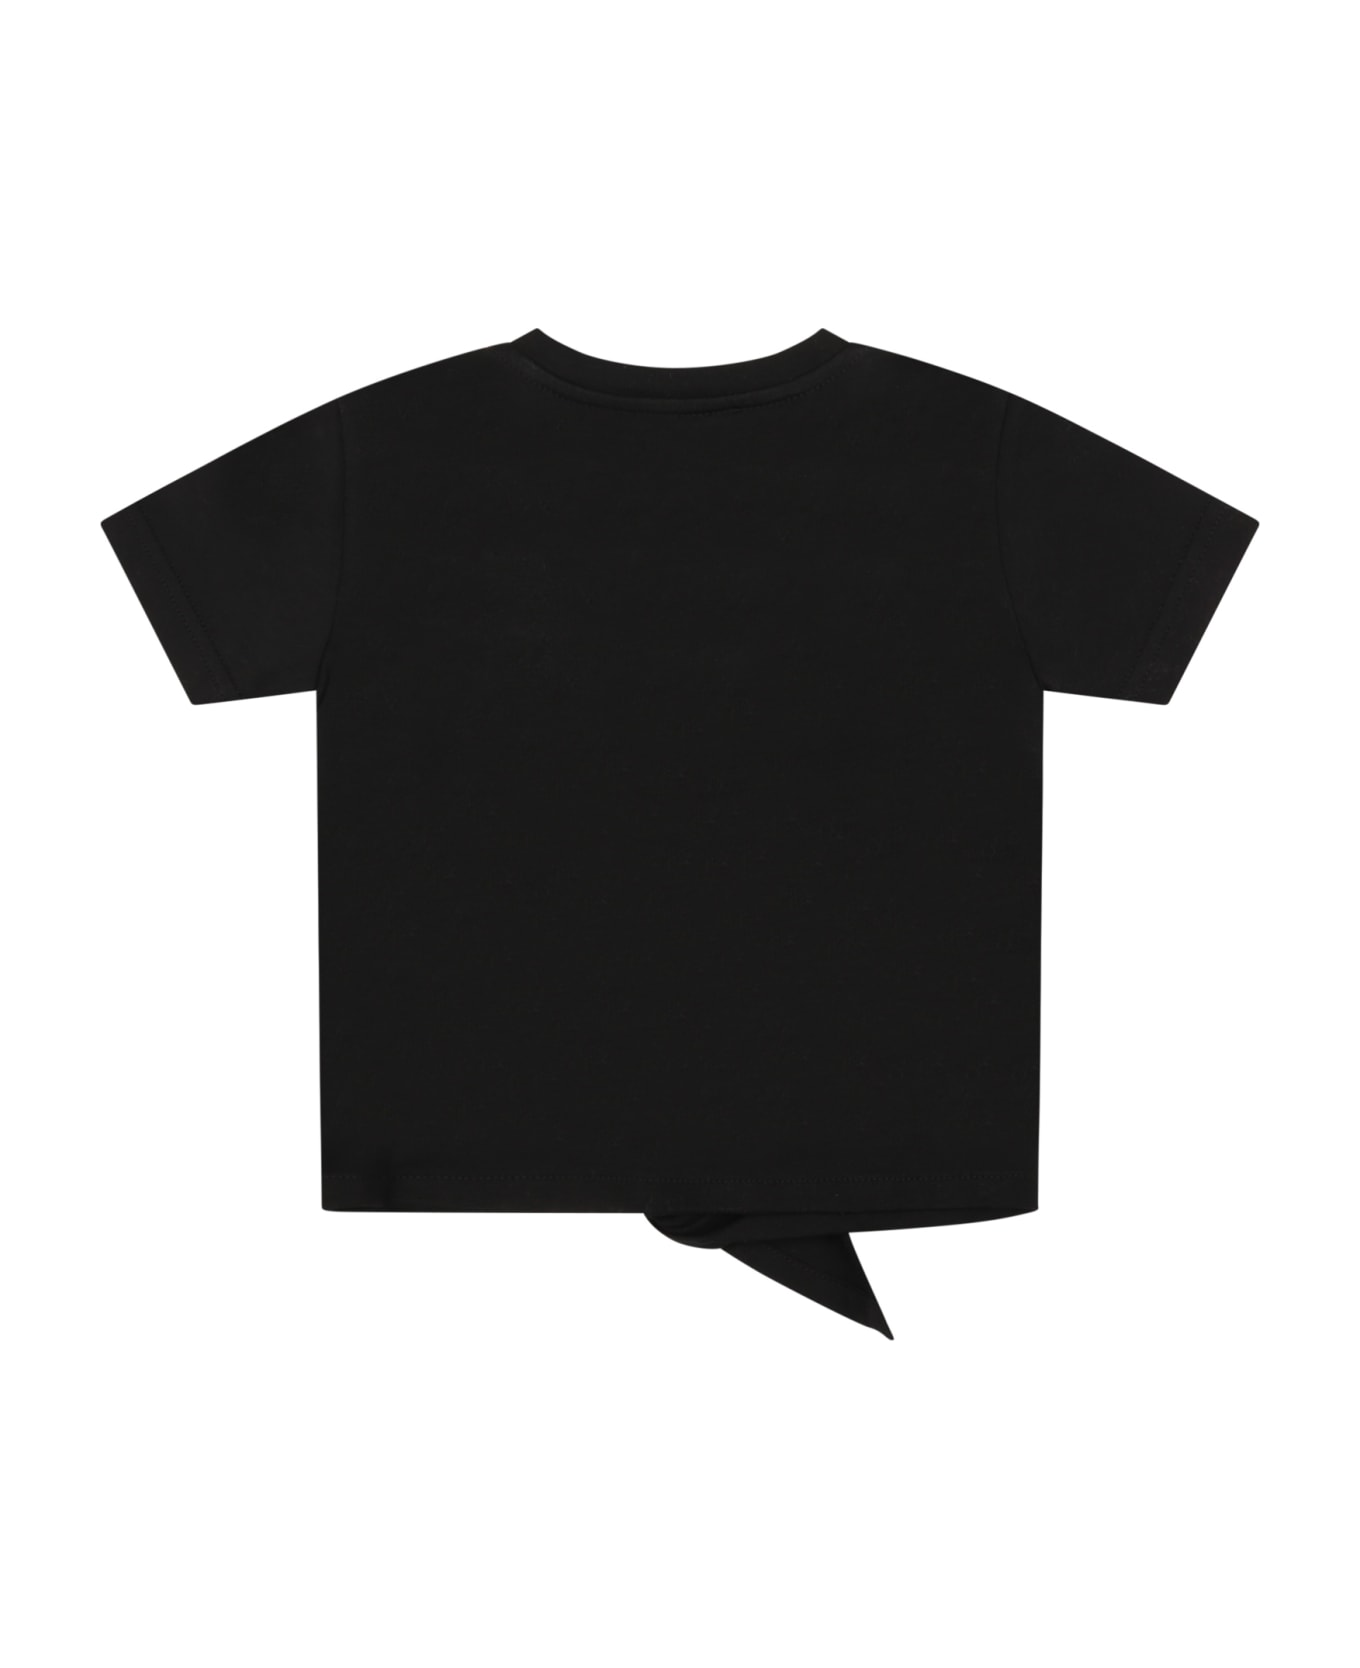 Dolce & Gabbana Black T-shirt For Baby Girl With Logo - Black